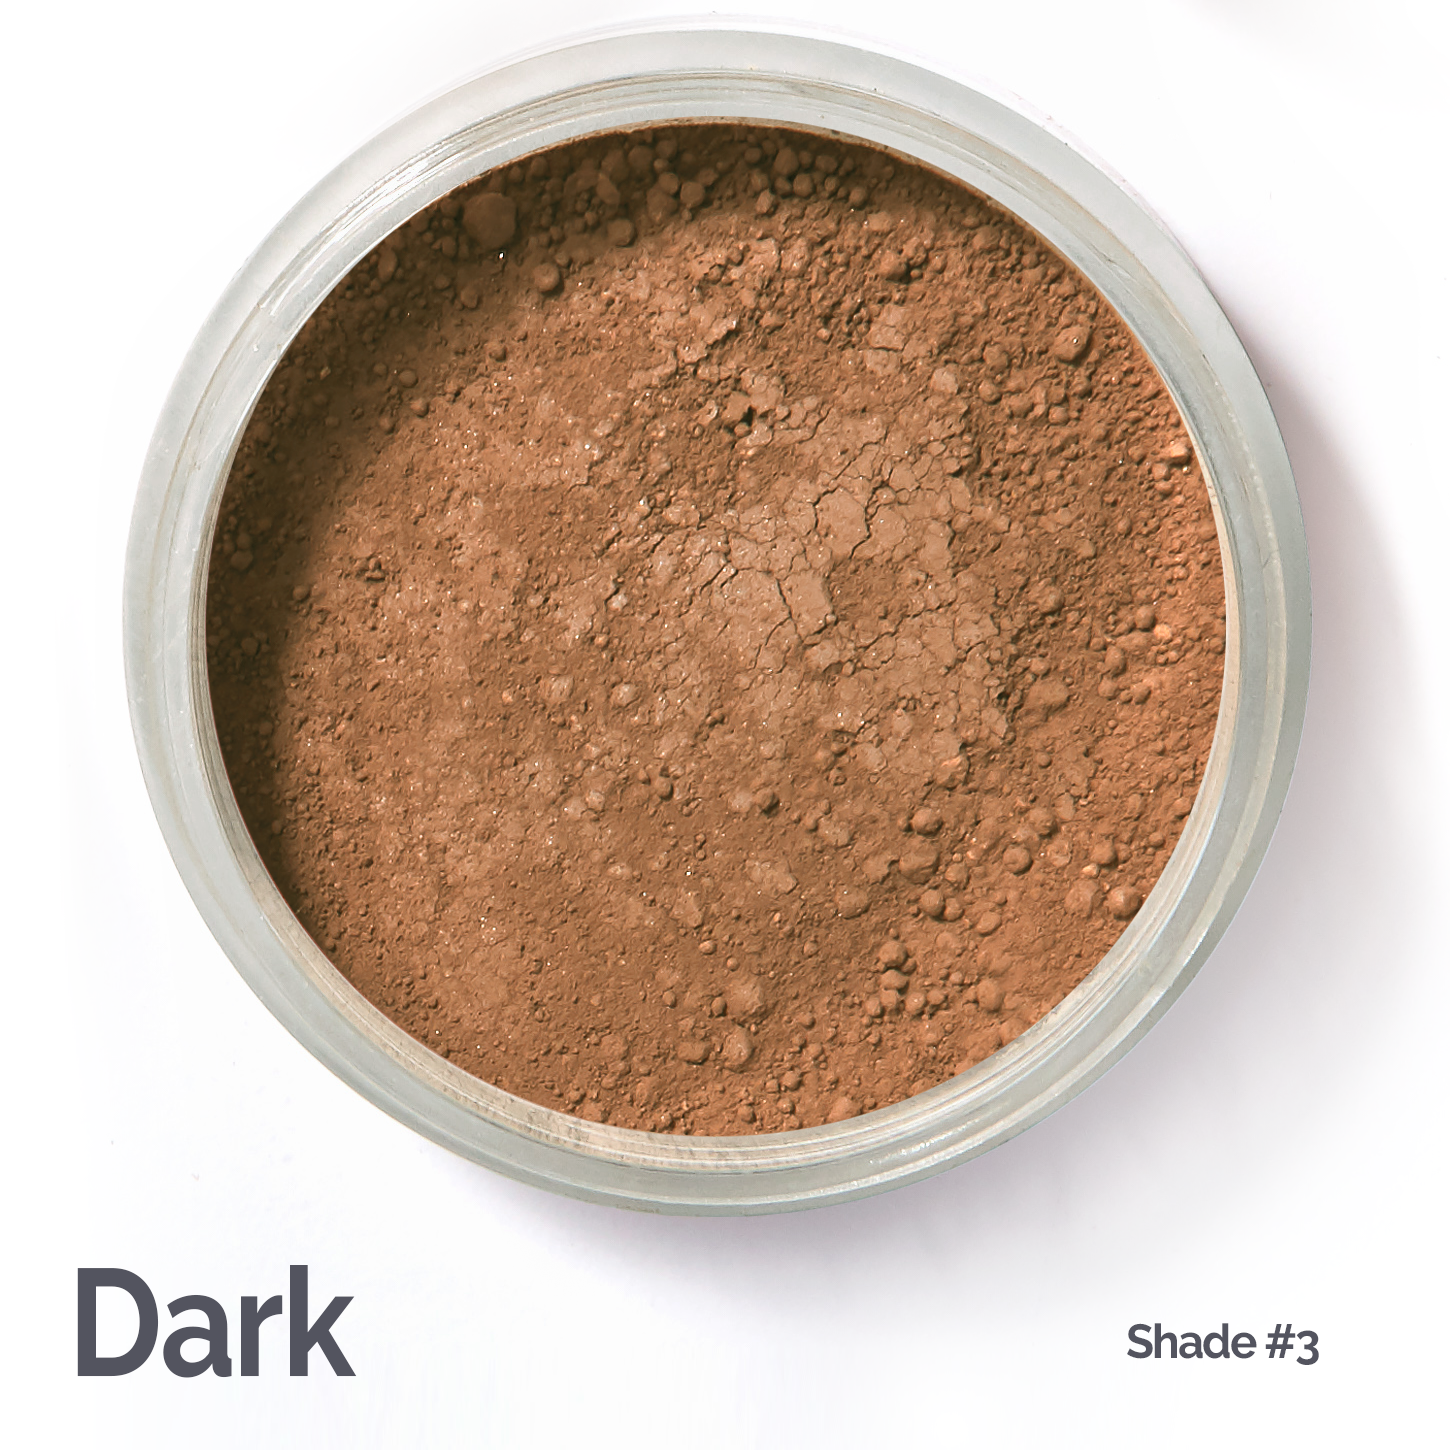 Works for almost all dark skin tones #dark